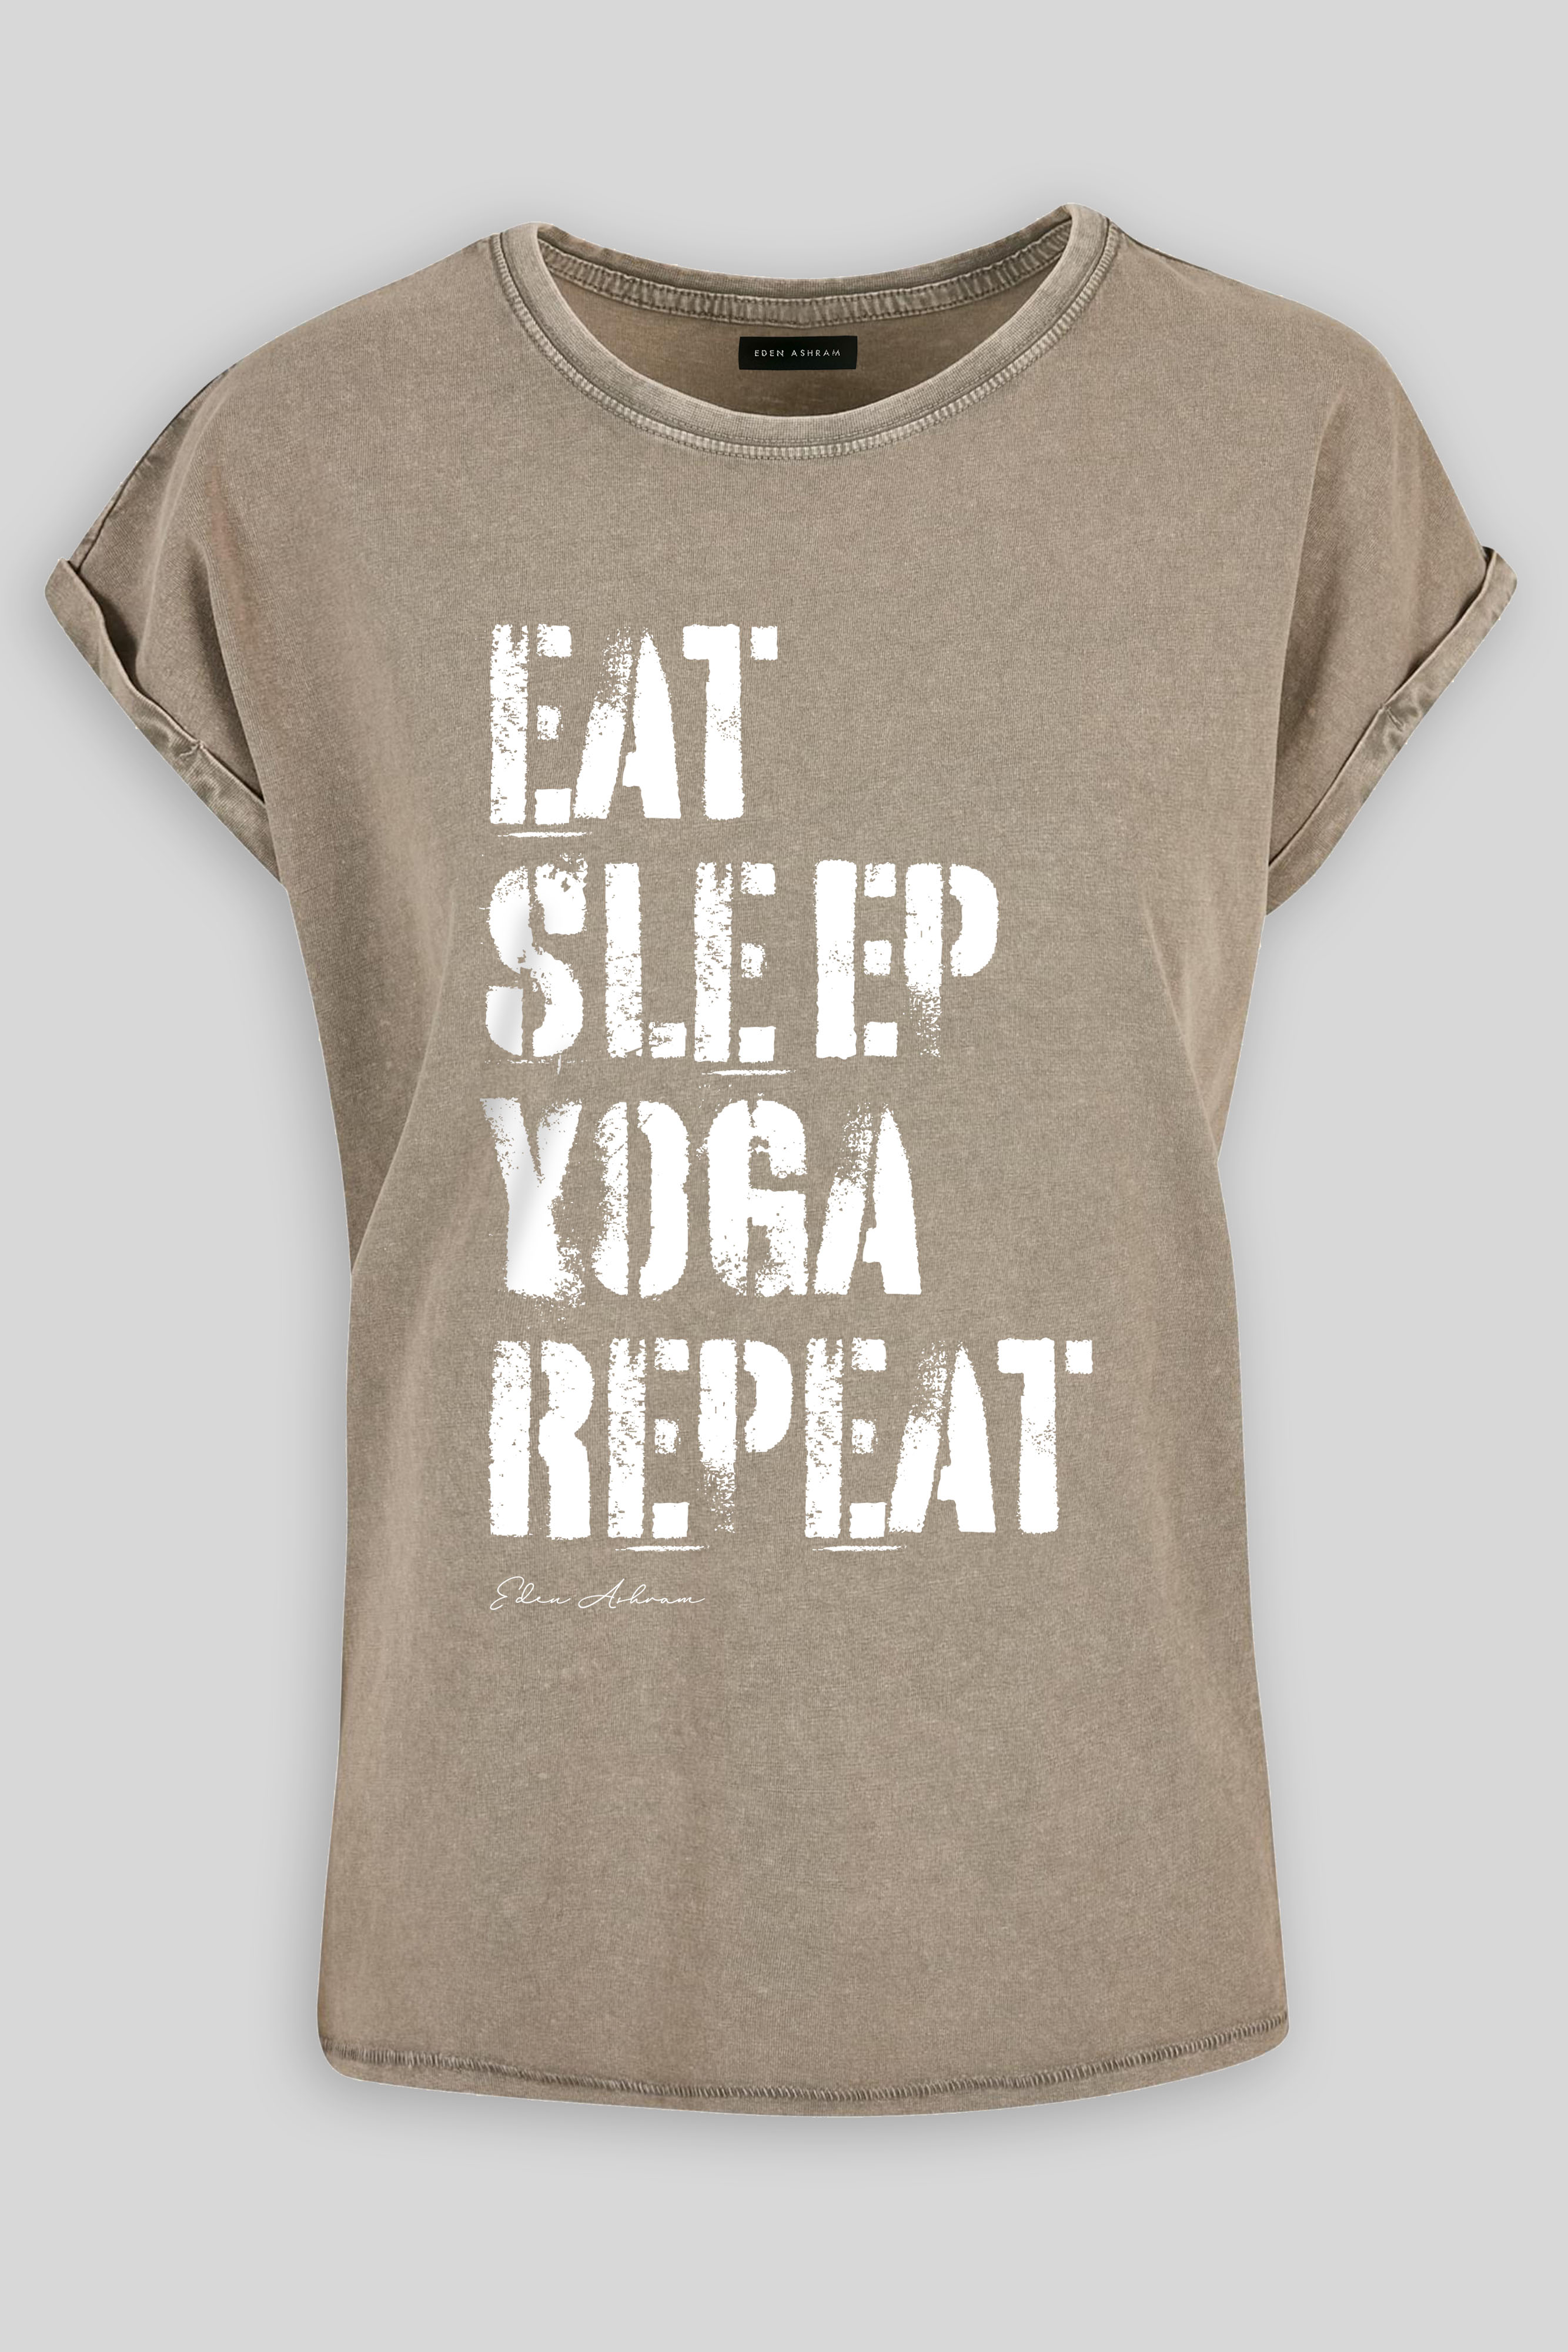 EDEN ASHRAM Eat Sleep Yoga Repeat Premium Relaxed Boyfriend T-Shirt Acid Wash Khaki